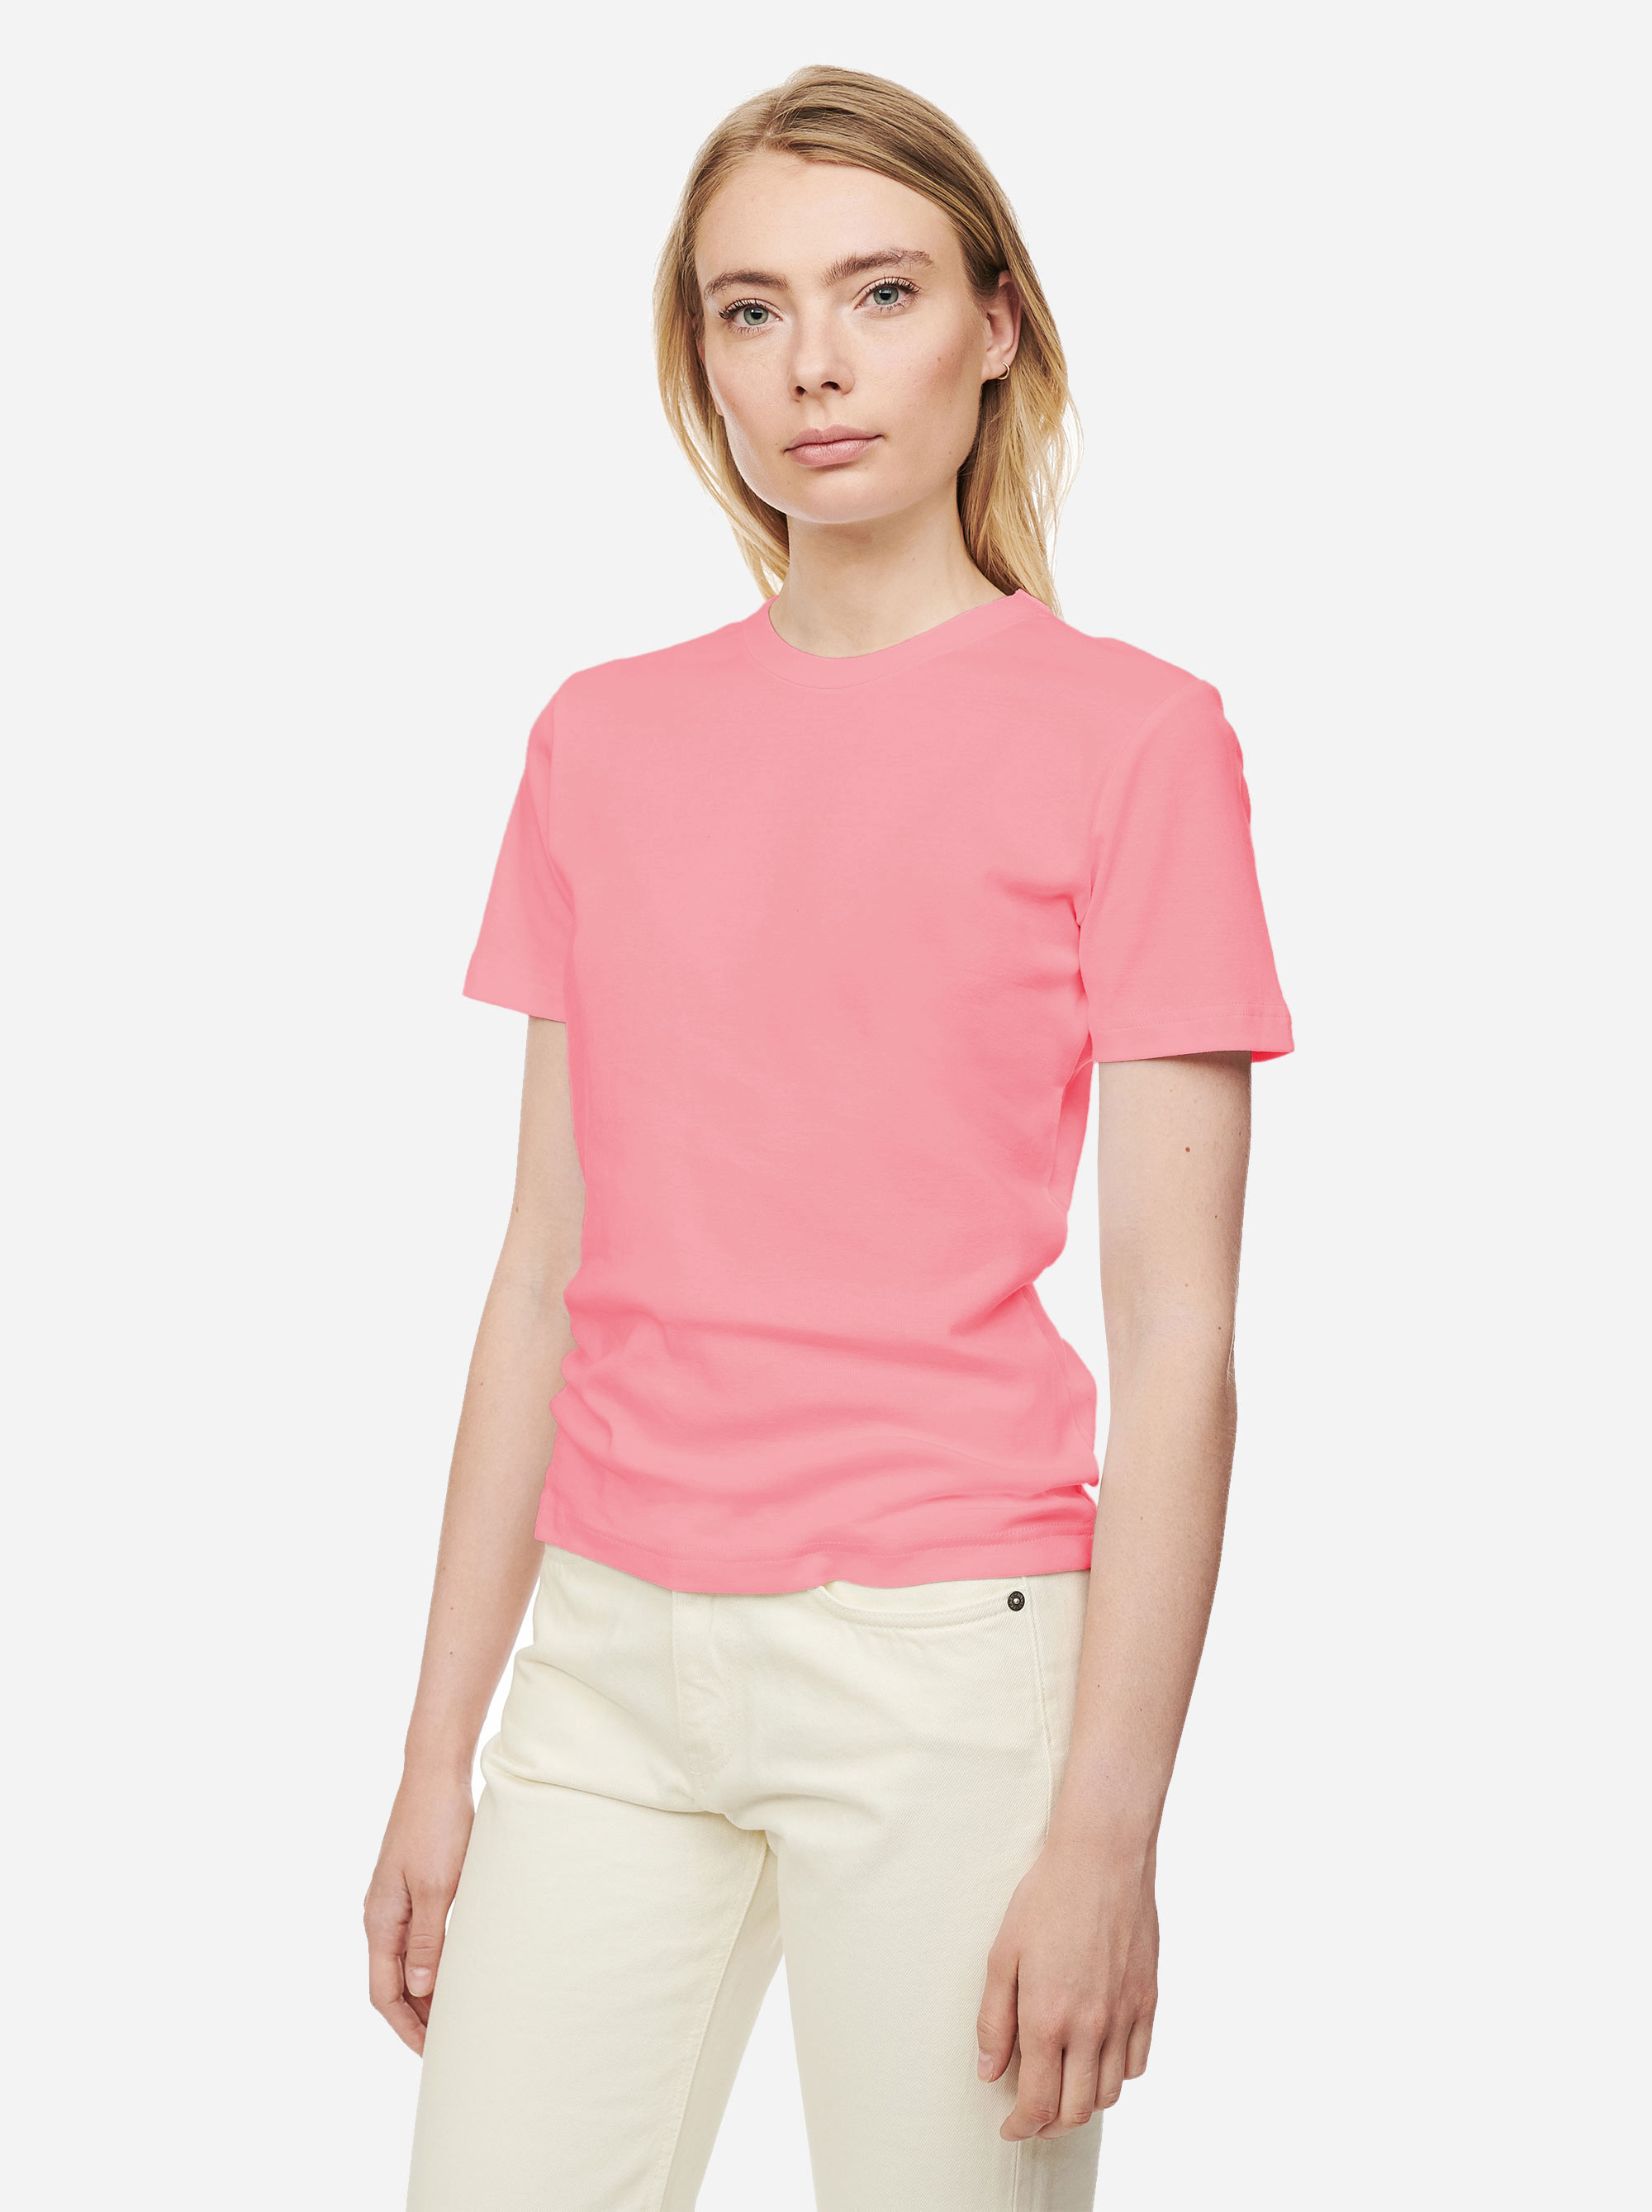 Teym - The T-Shirt - Women - Pink - 1